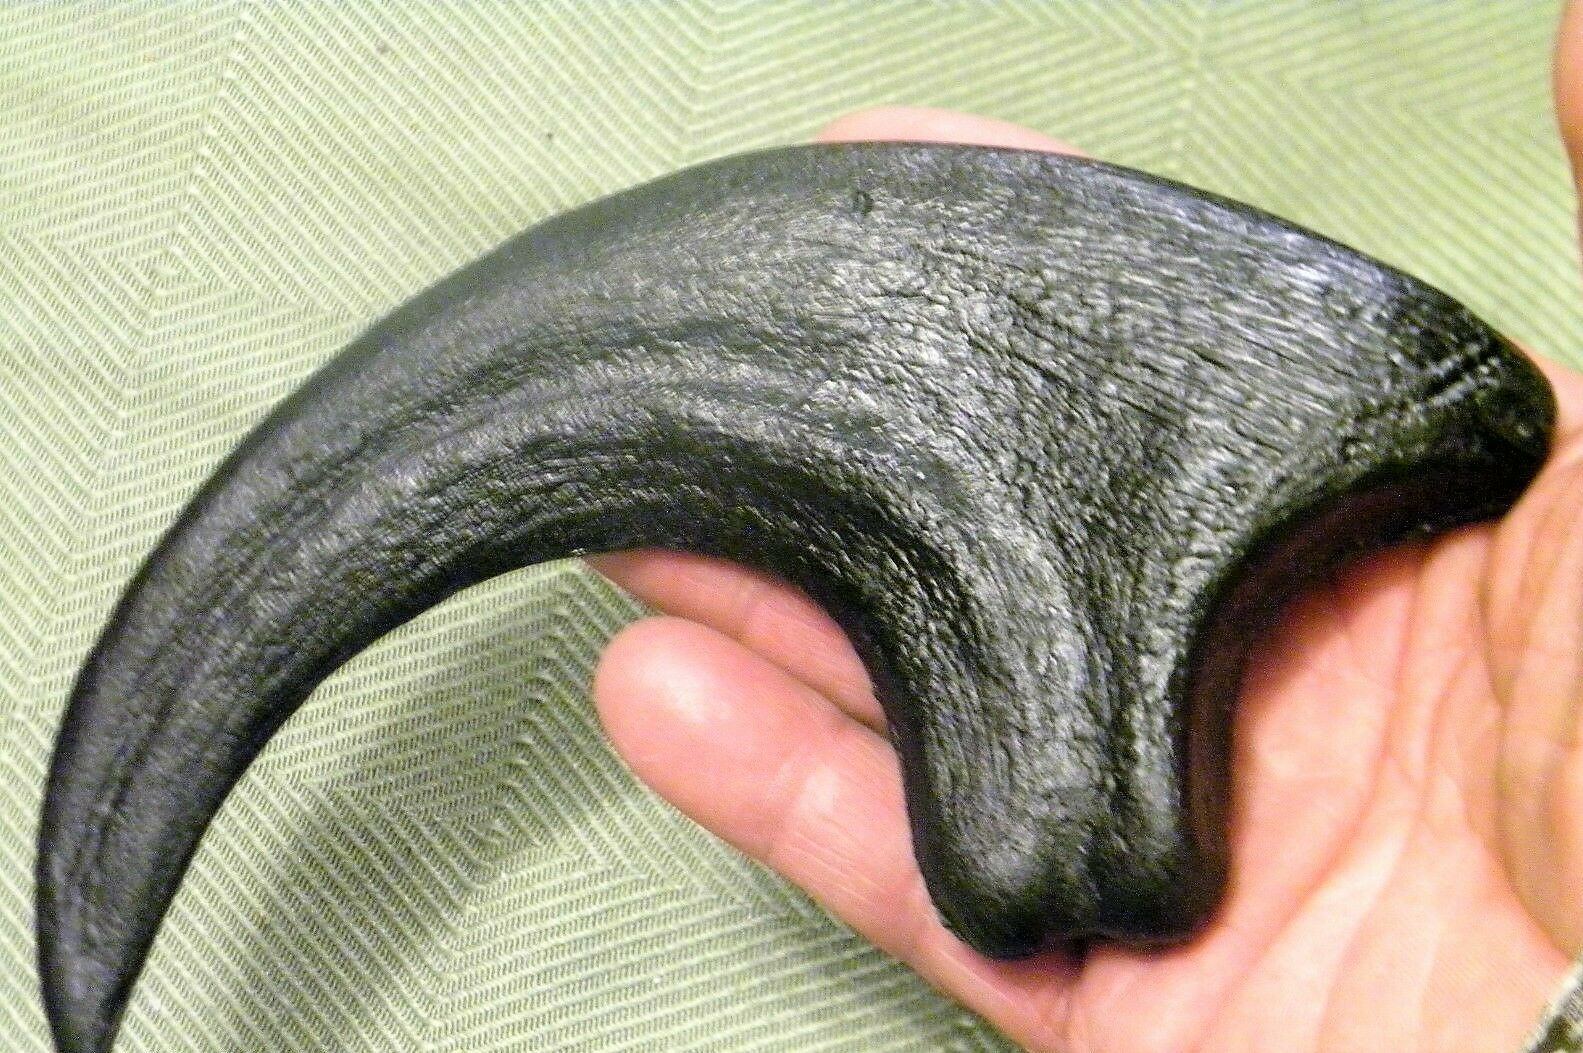 Deinonychus Raptor Claw Replica 4 Inches Long Black Resin Model